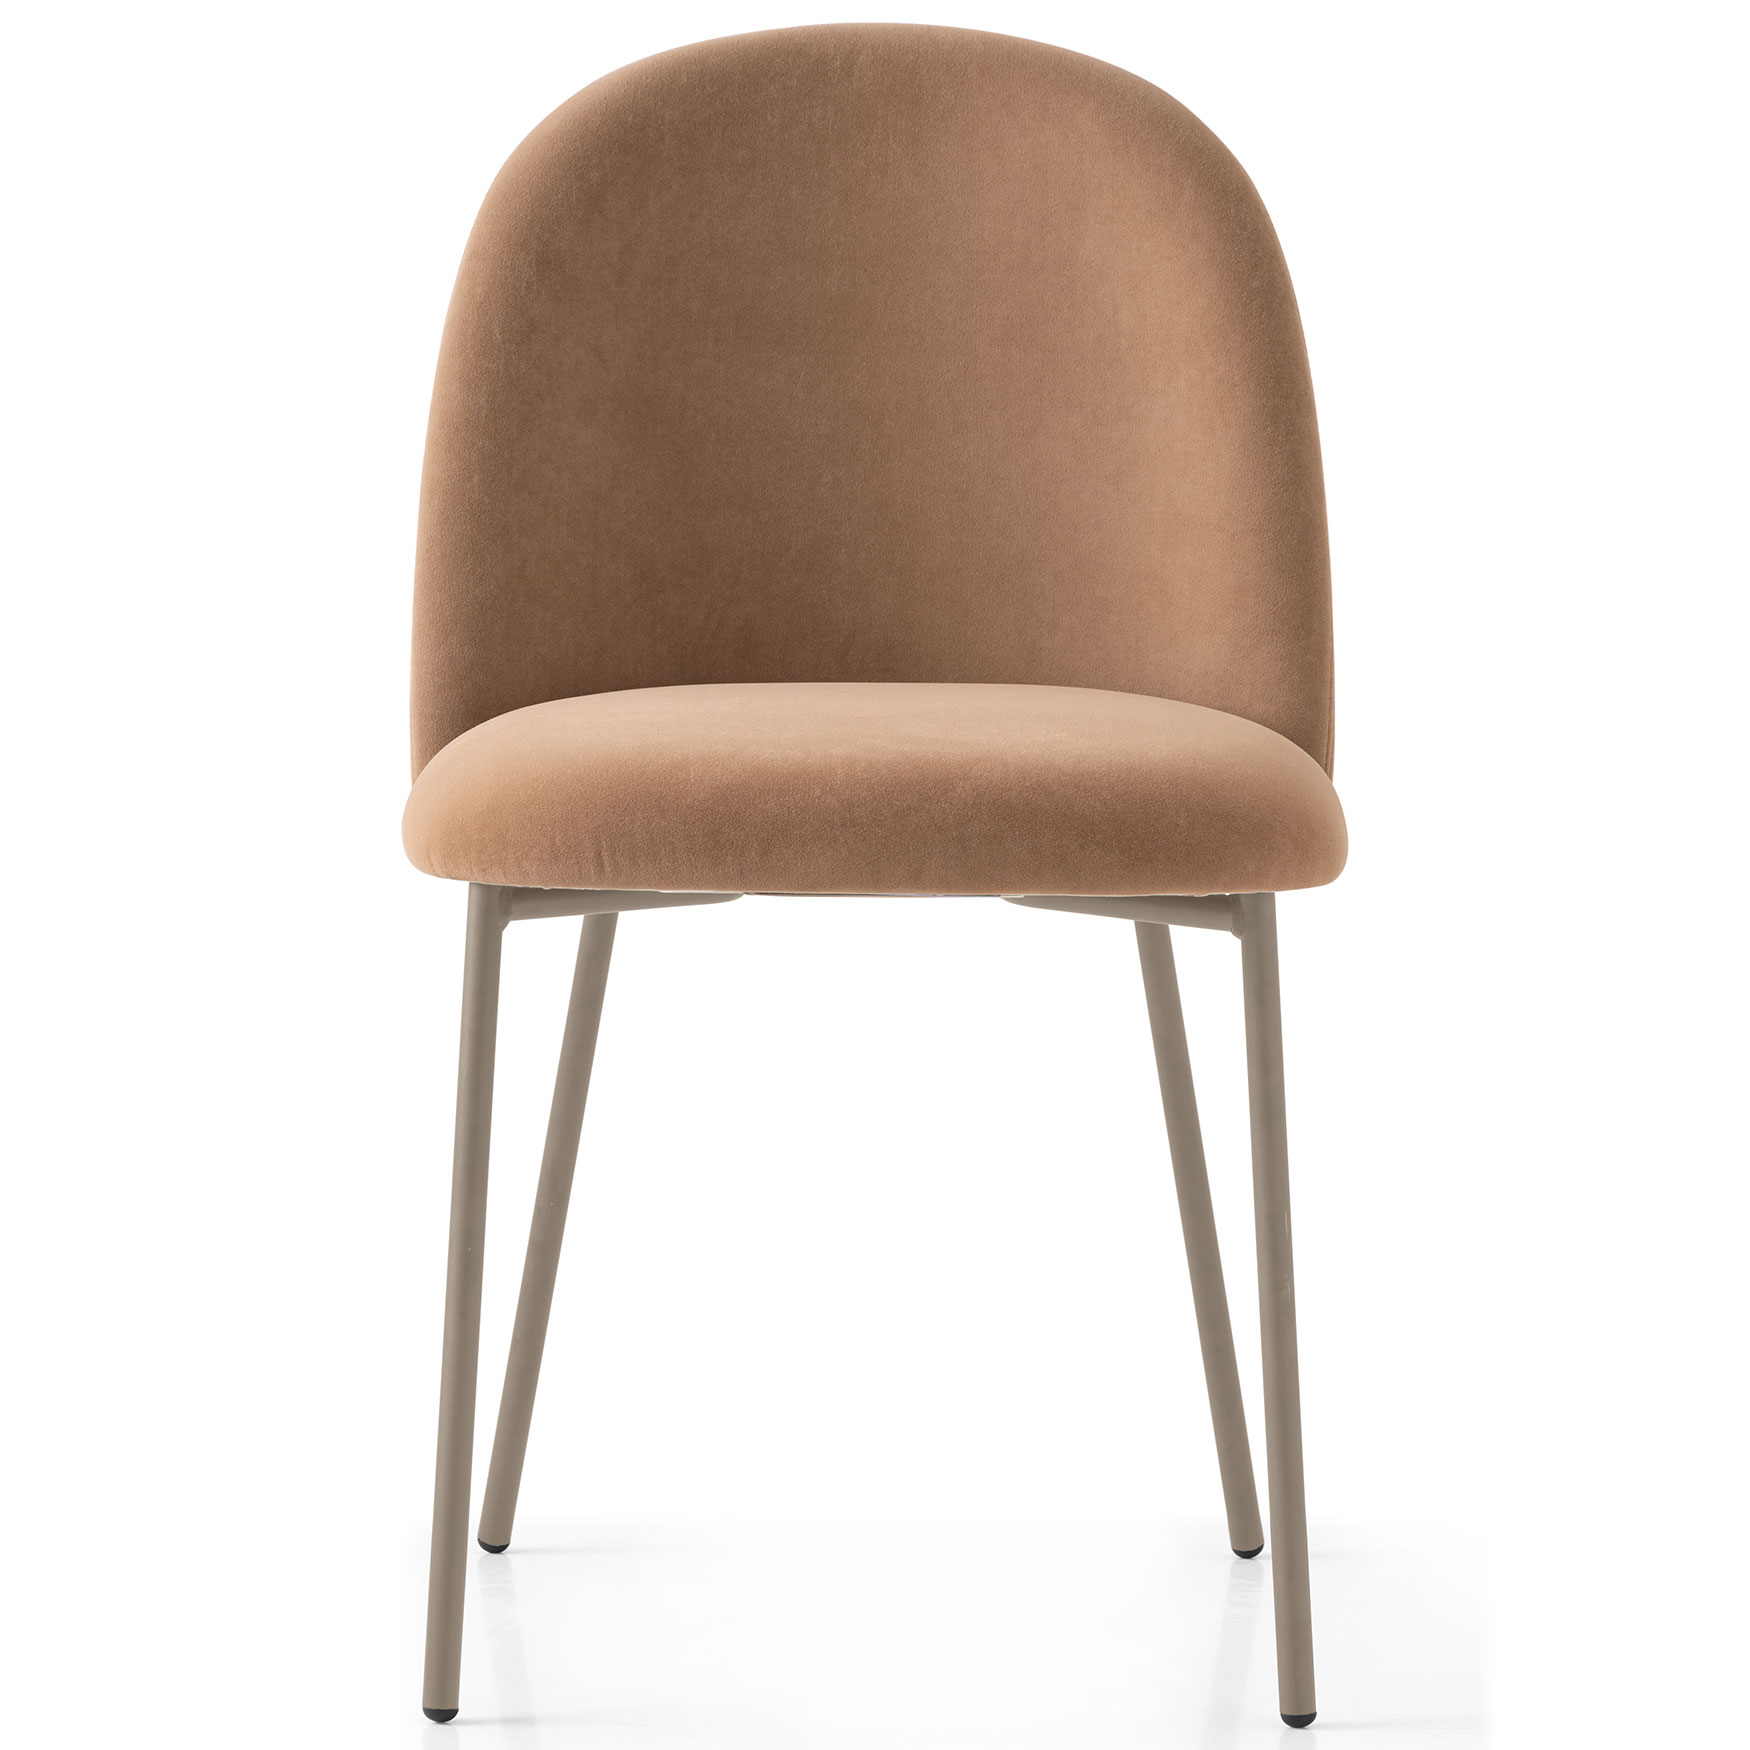 Tuka Chair by Connubia | | CB1993000176SLM00000000 CON1086544